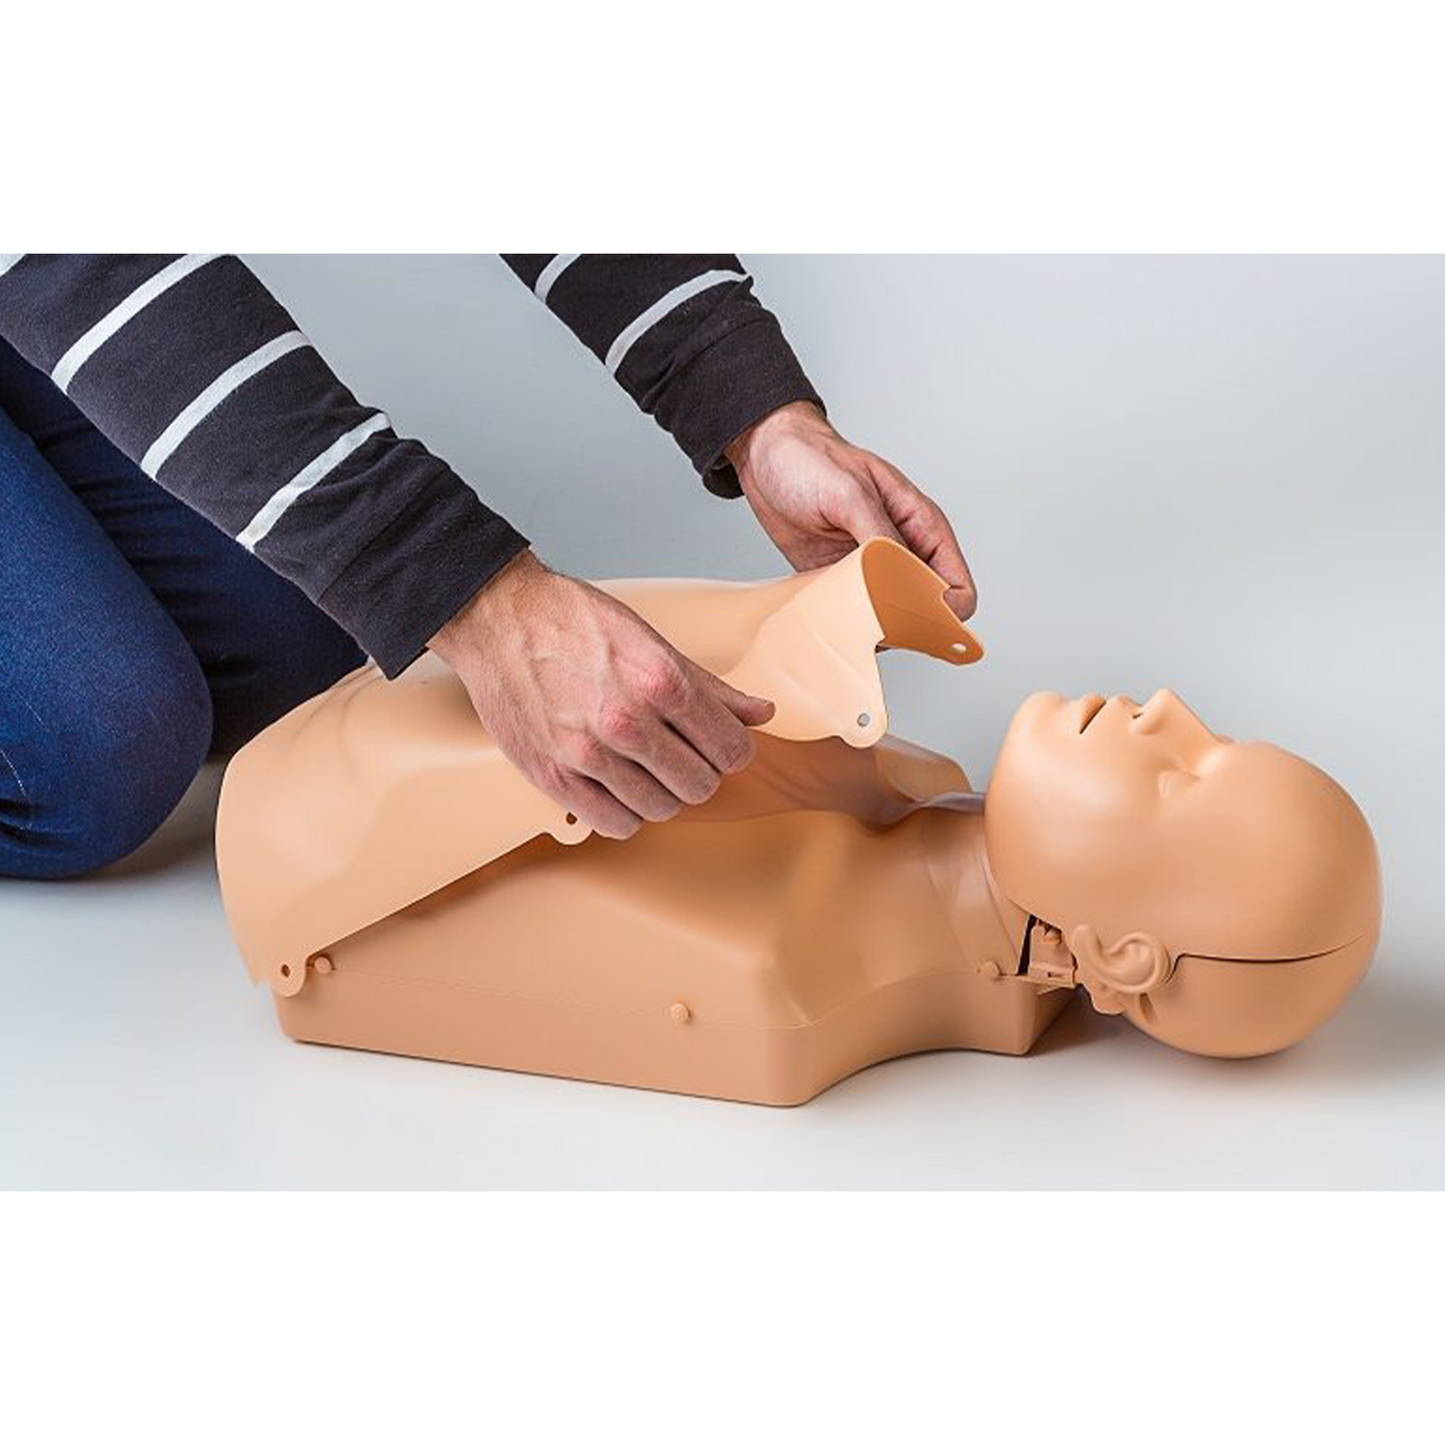 PractiMan Advanced CPR Adult/Child Manikin - Single